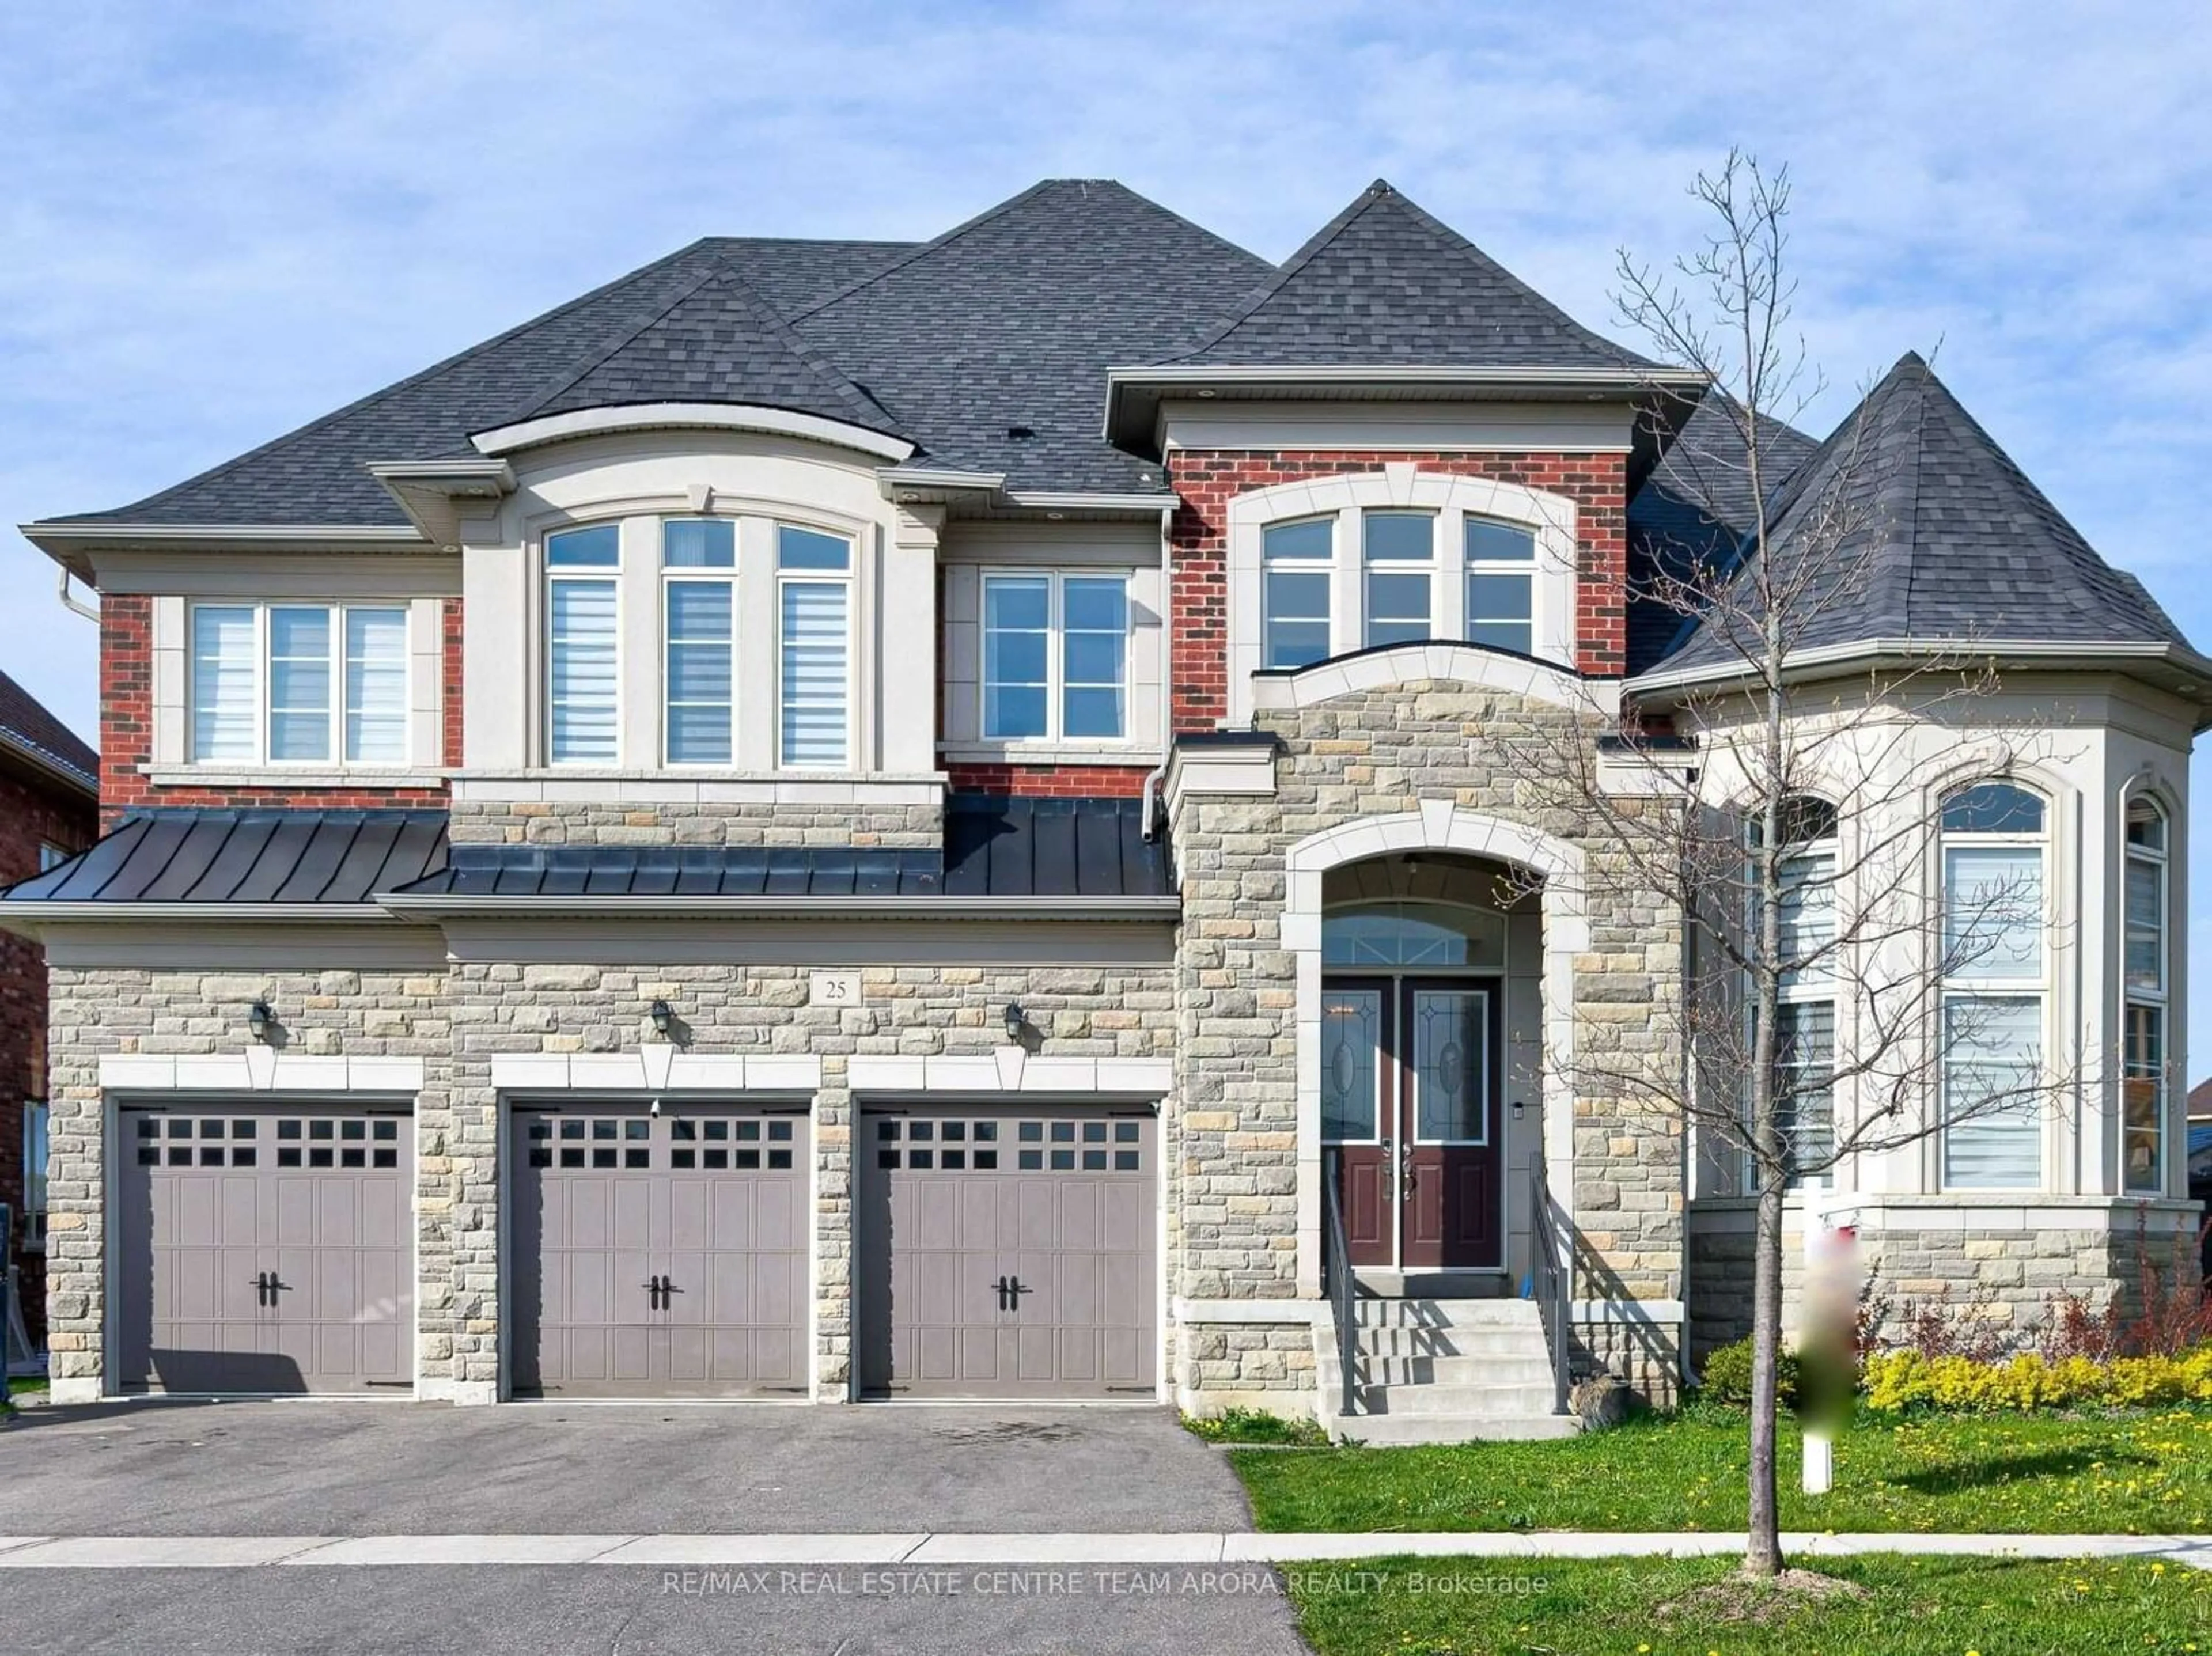 Home with brick exterior material for 25 Leo Austin Rd, Brampton Ontario L6P 4C4